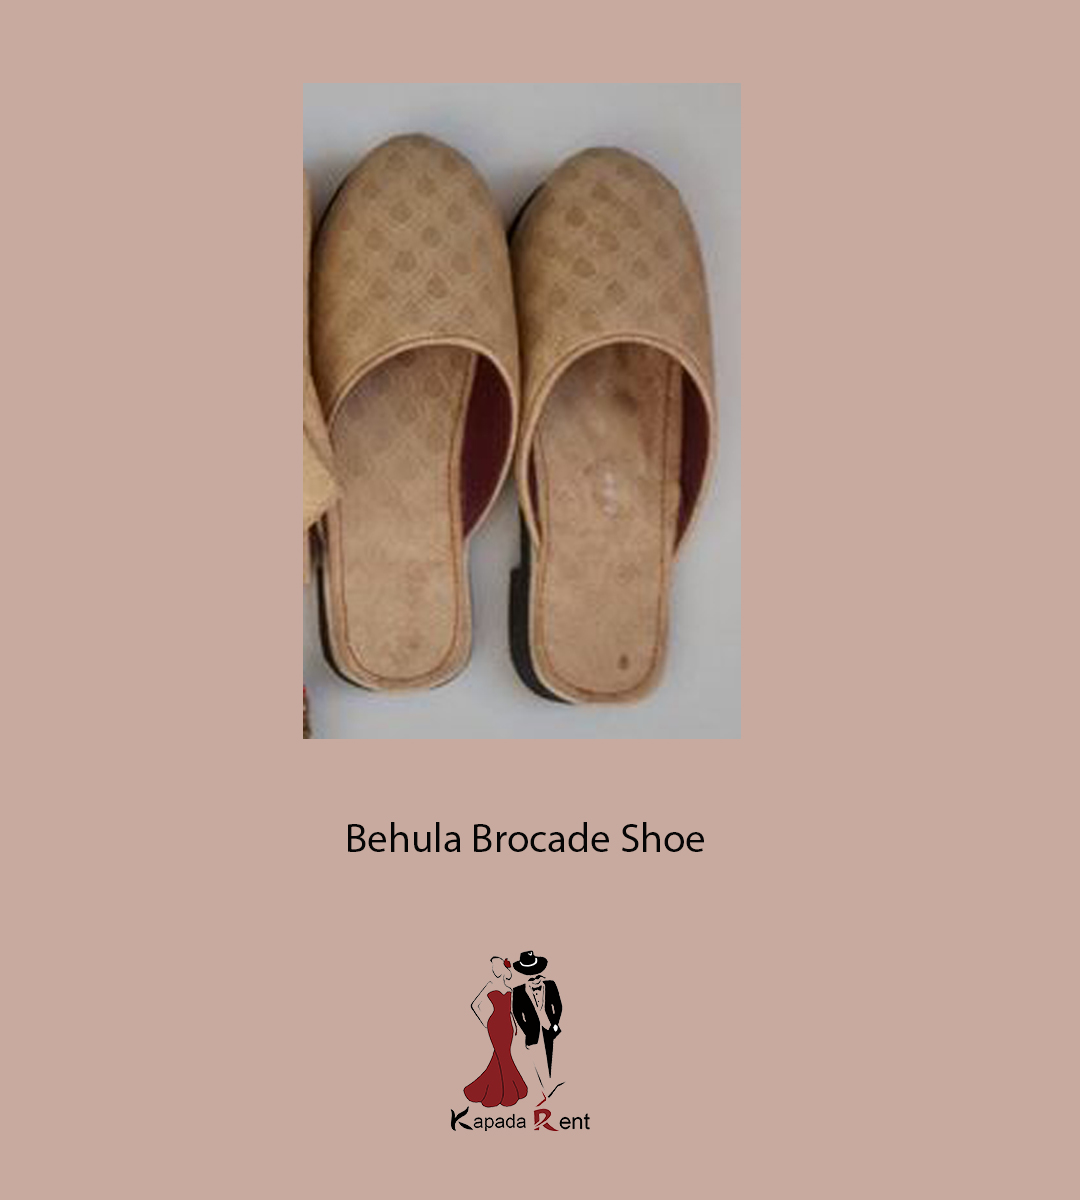 Behula Brocade Shoe